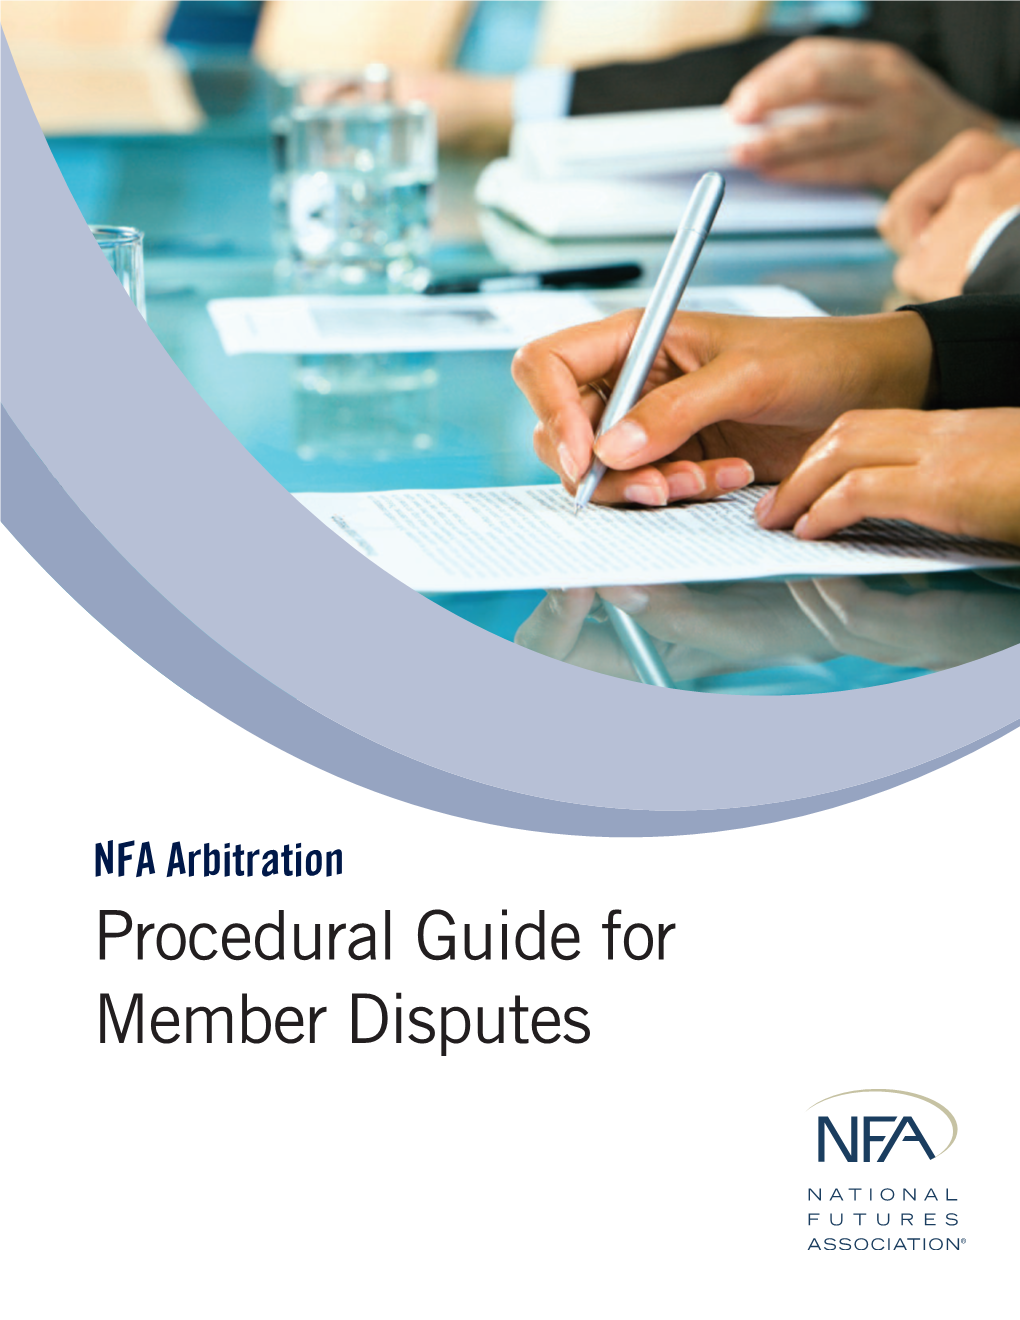 NFA Arbitration: Procedural Guide for Member Disputes